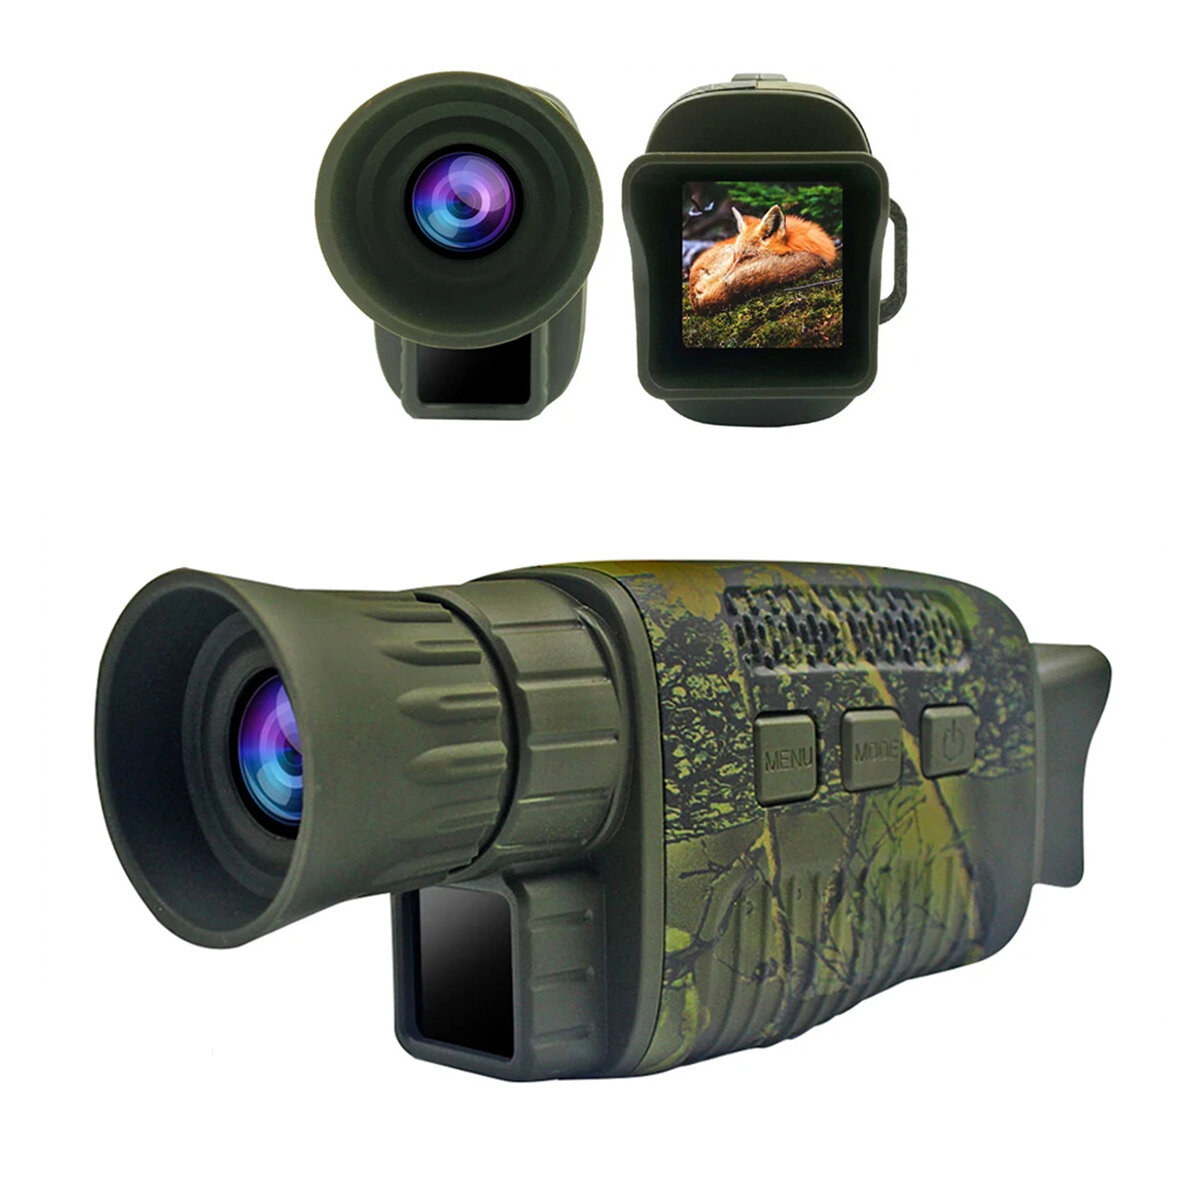 NV1000 Outdoor-Nachtsichtgerät Infrarot-Optik-Monokular 5-fach Digitalzoom 200 m volle Dunkelsichtdistanz